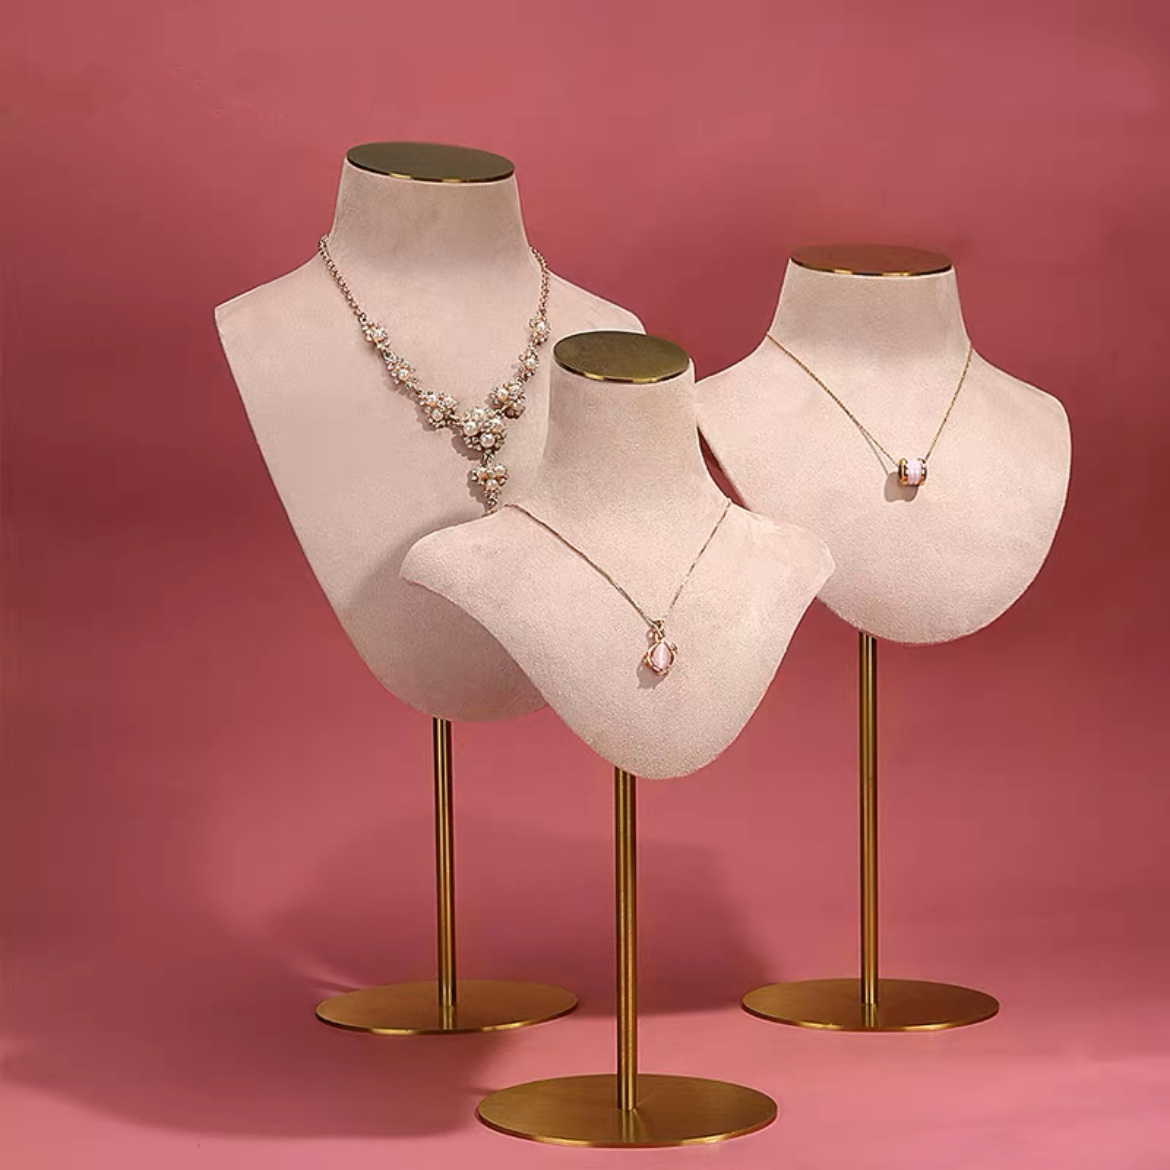 Black Chirstmas gifts wedding jewelry birthday hot selling storage travel rings necklace case - COPY - uwn1qj - COPY - rh6s8w